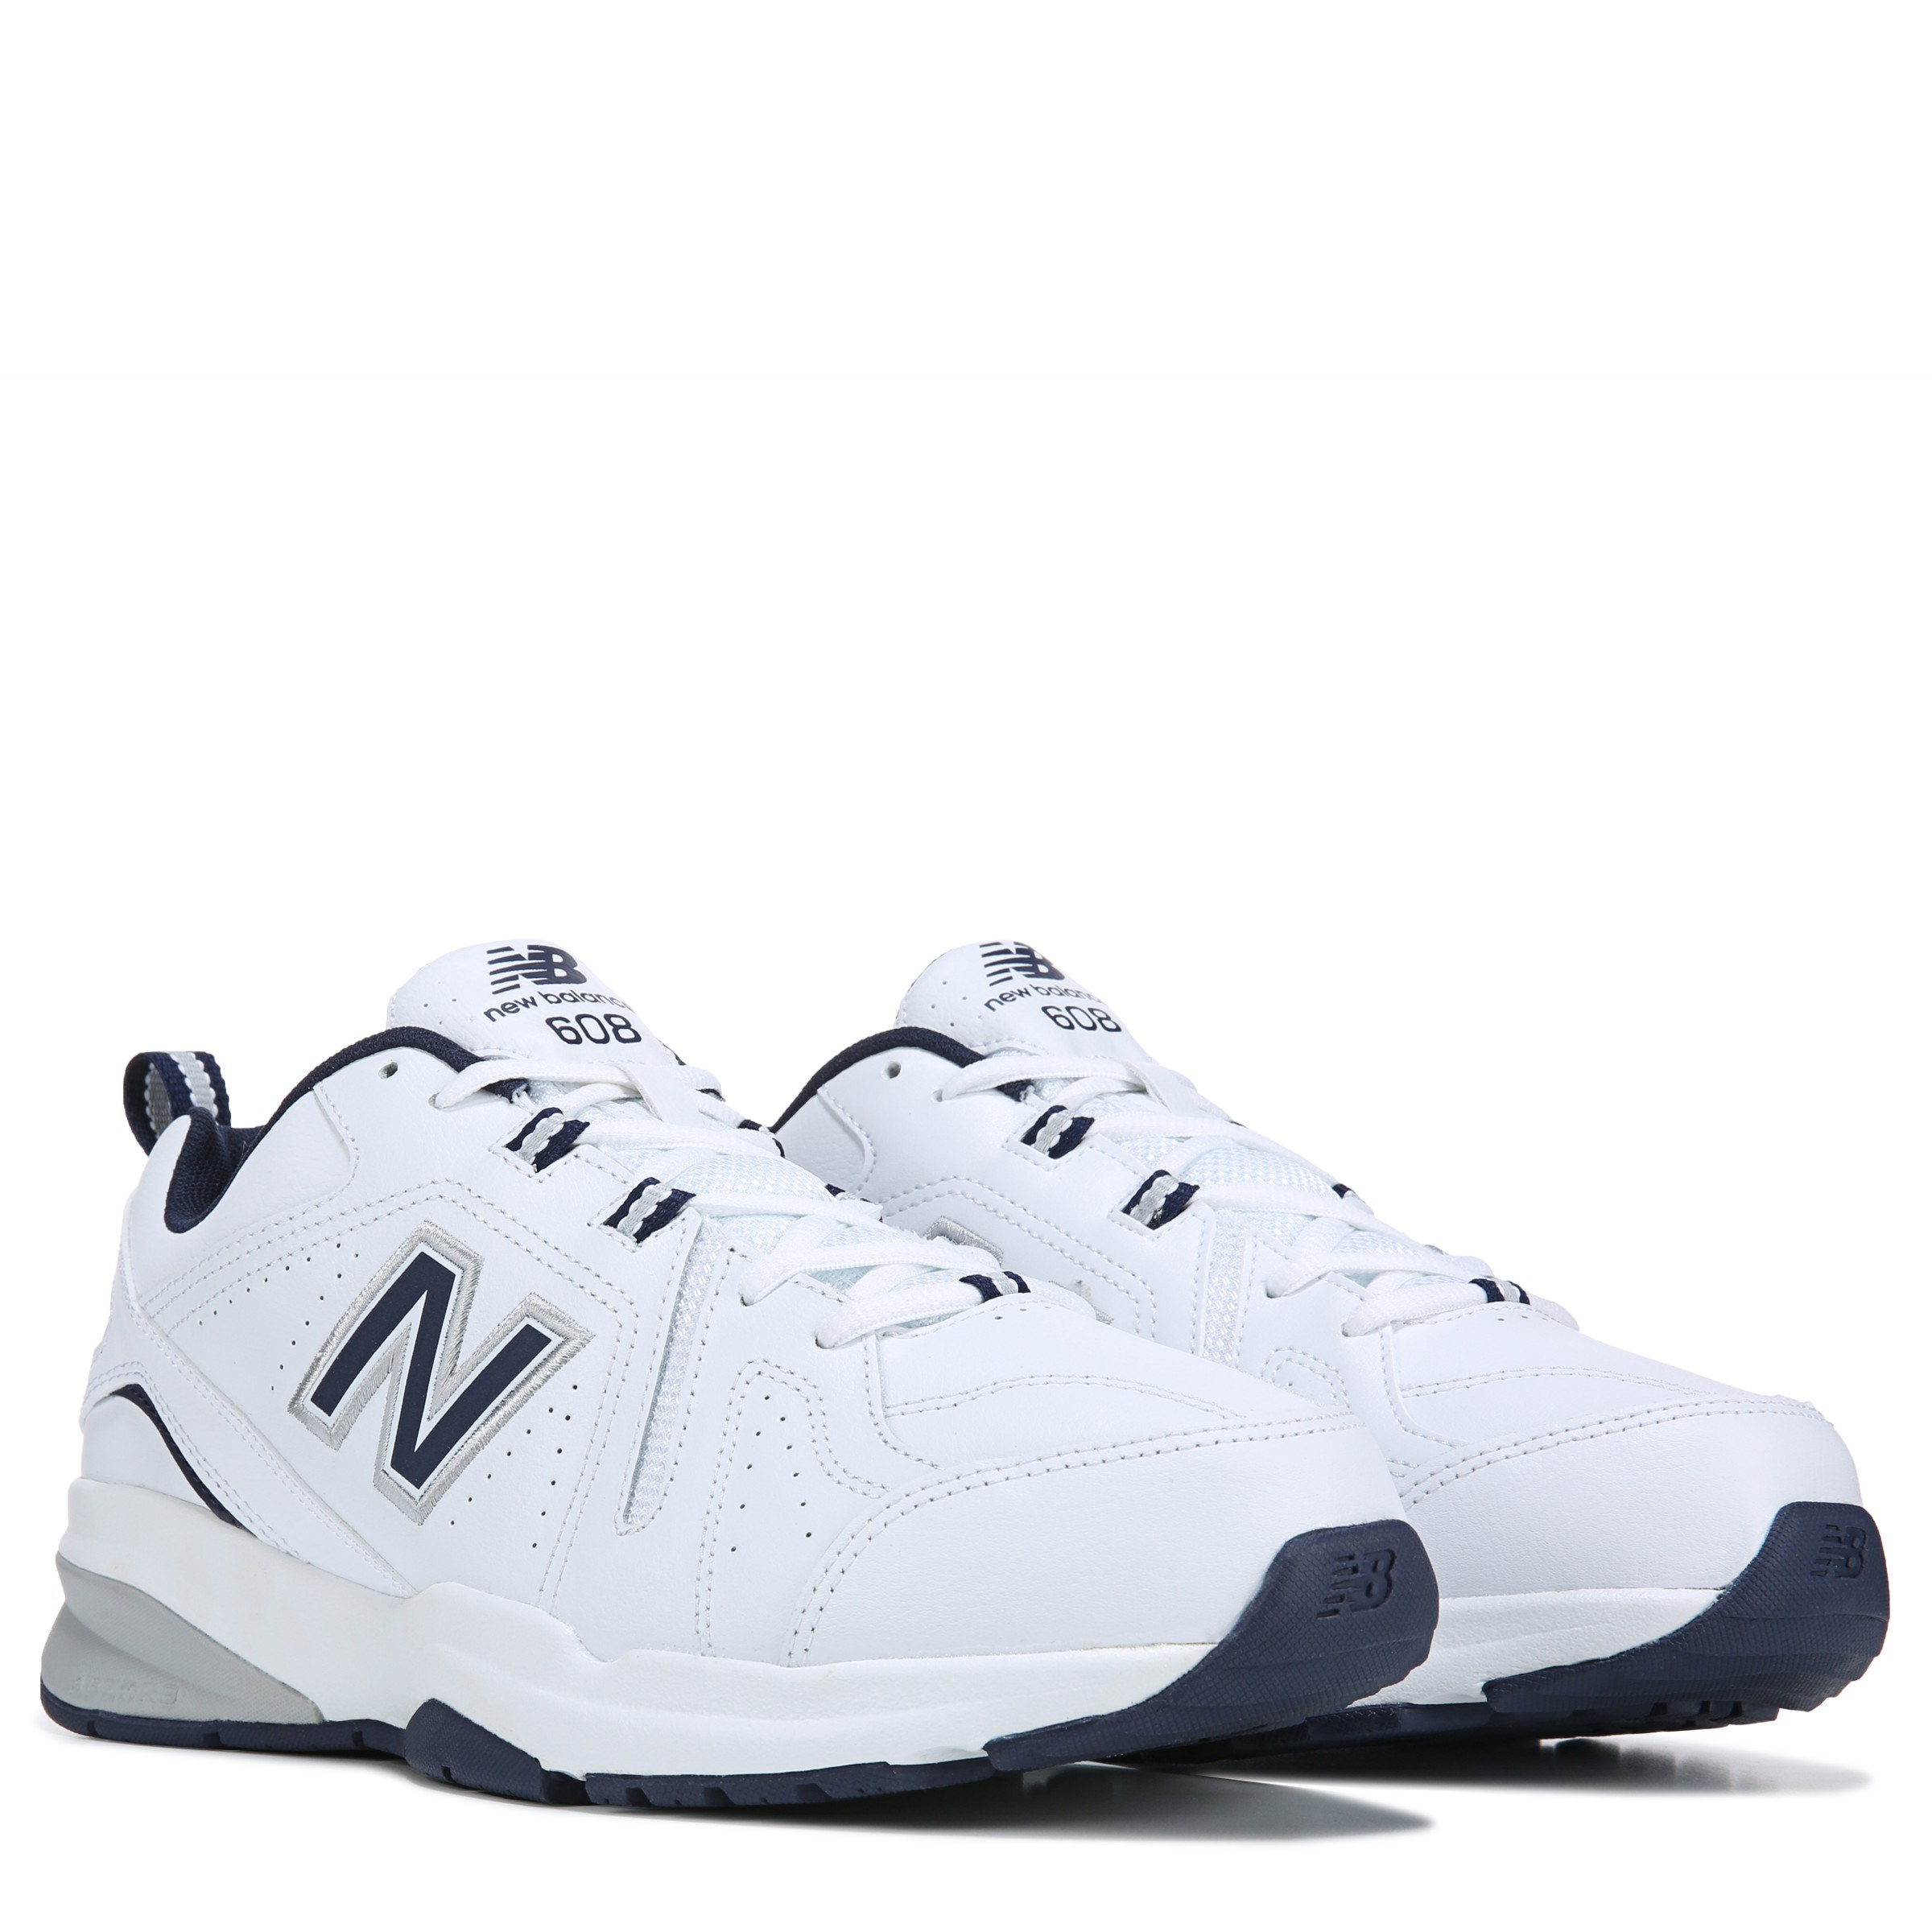 New Balance Men's 608 V5 Medium/X-Wide Walking Shoes (White/Navy) - Style #707478